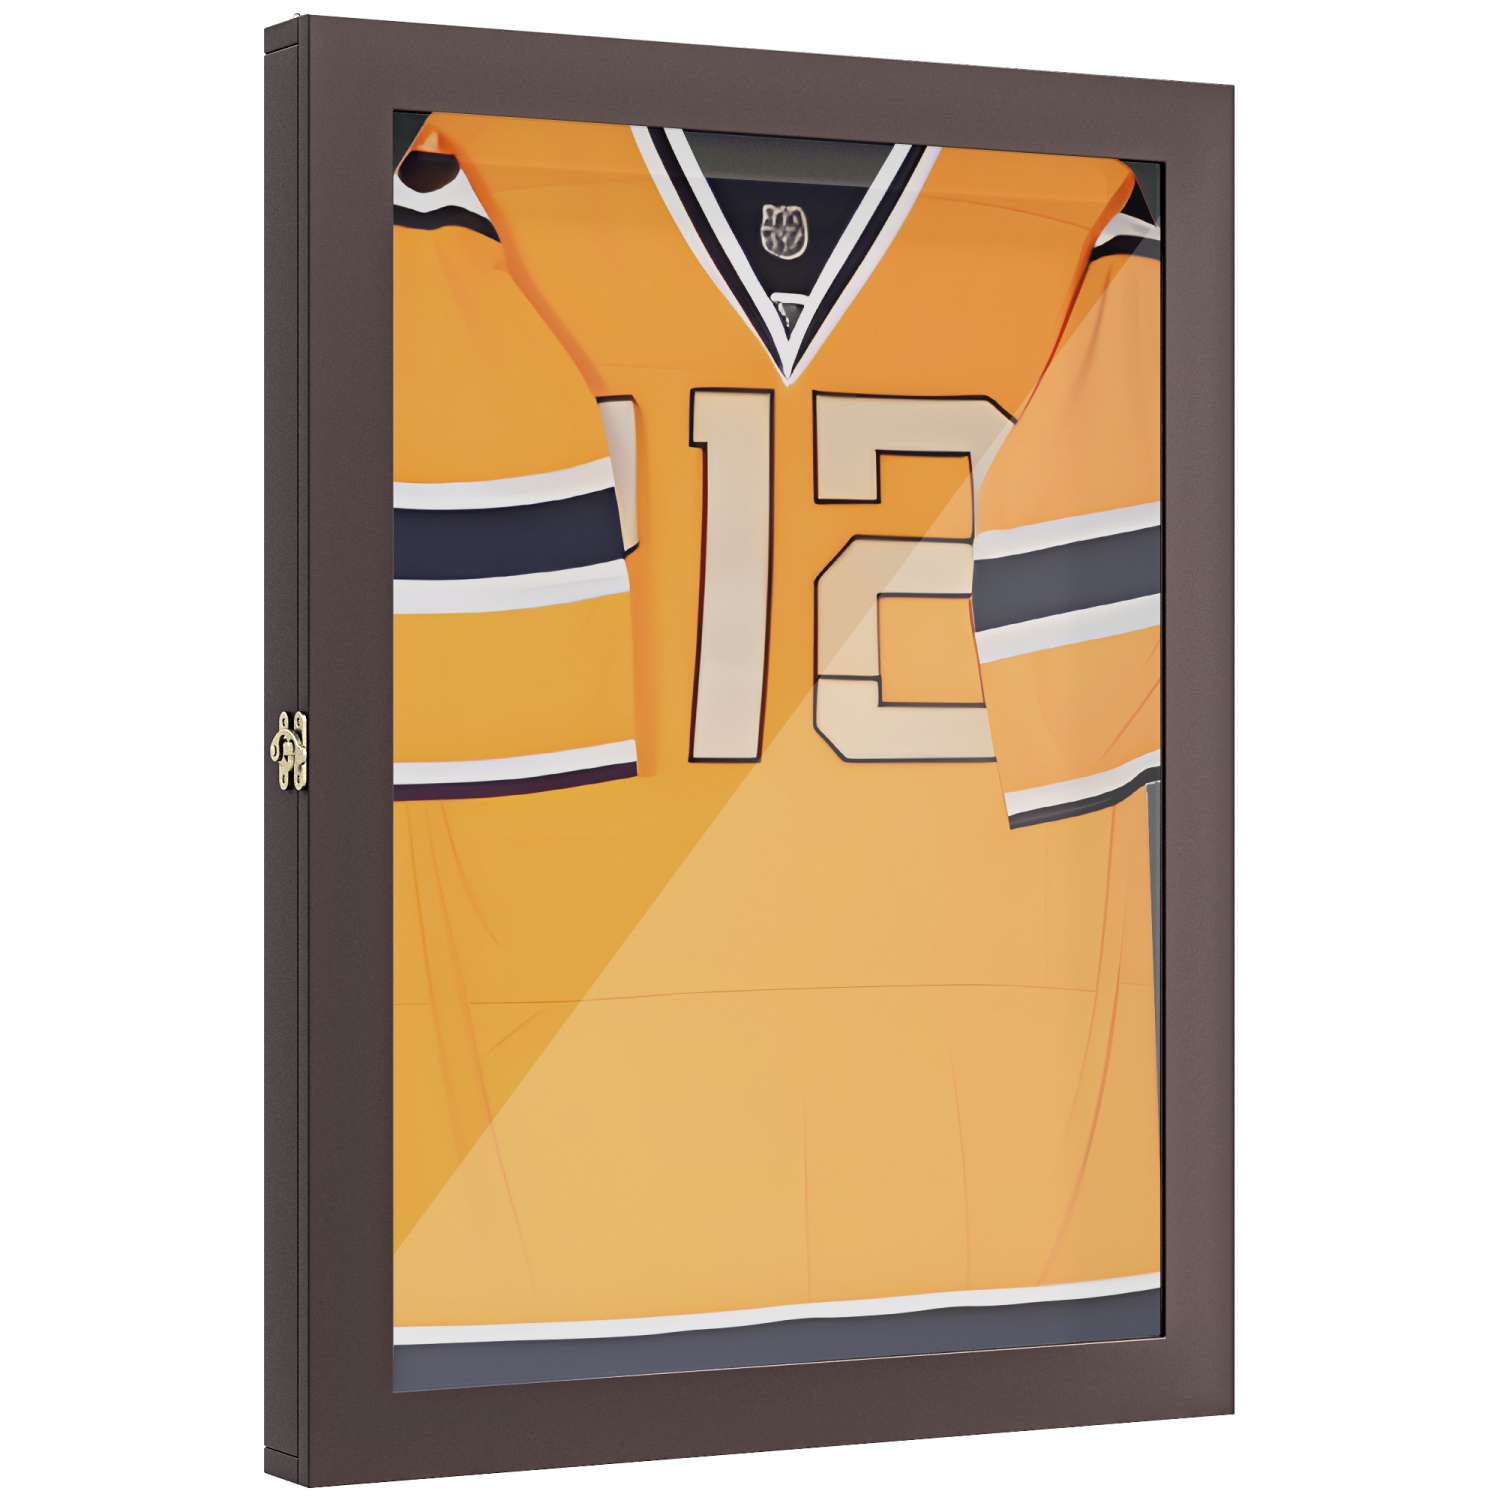 HOMCOM Jersey Display Frame Case, Acrylic Sports Shirt Shadow Box for Basketball Football Baseball (Brown, 28" W x 35" H)